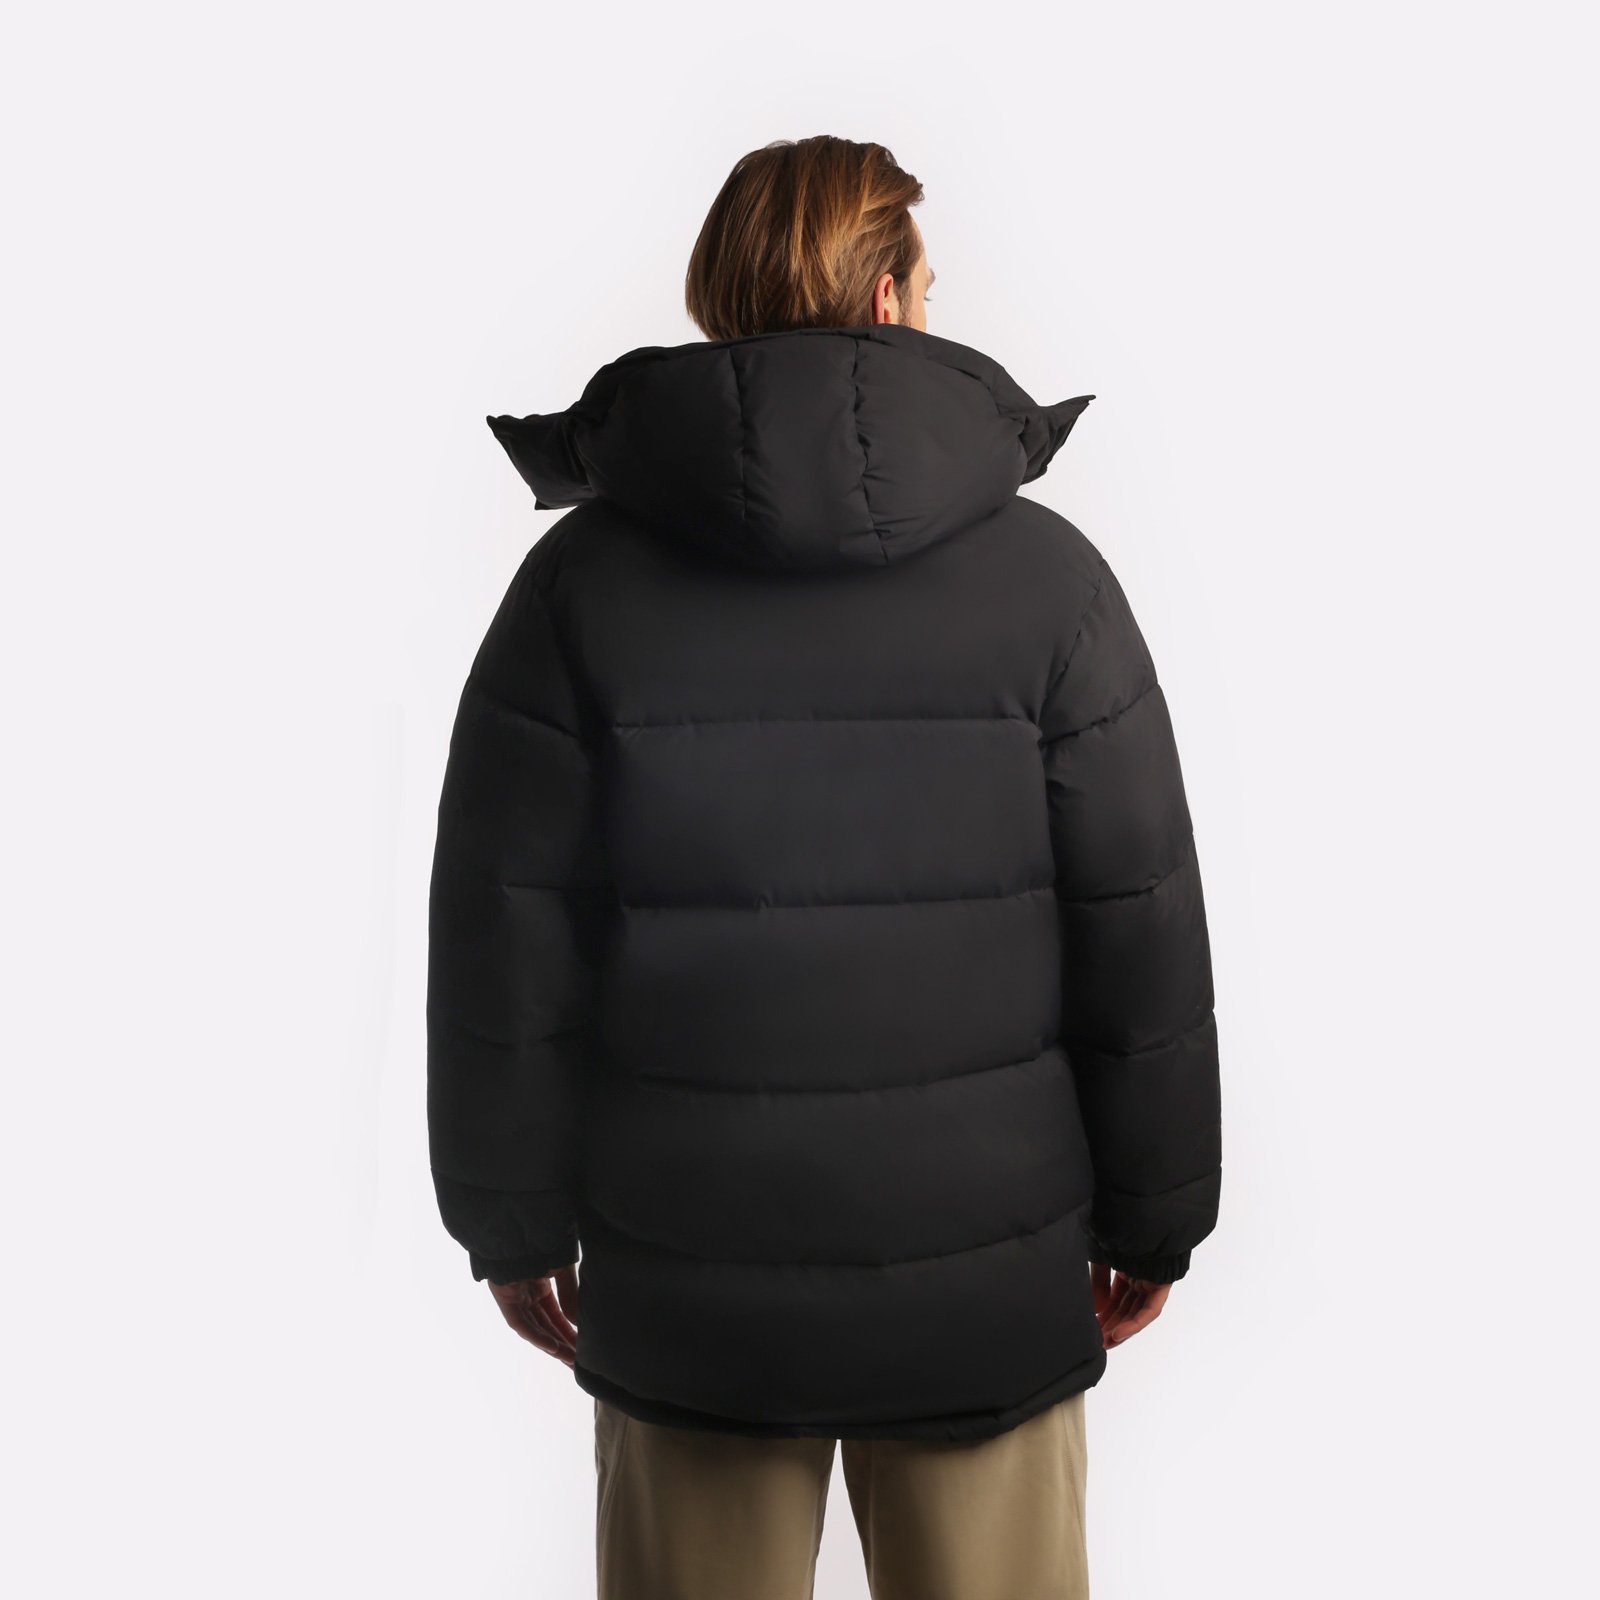 мужская куртка Carhartt WIP Milter Jacket  (I032267-black)  - цена, описание, фото 4